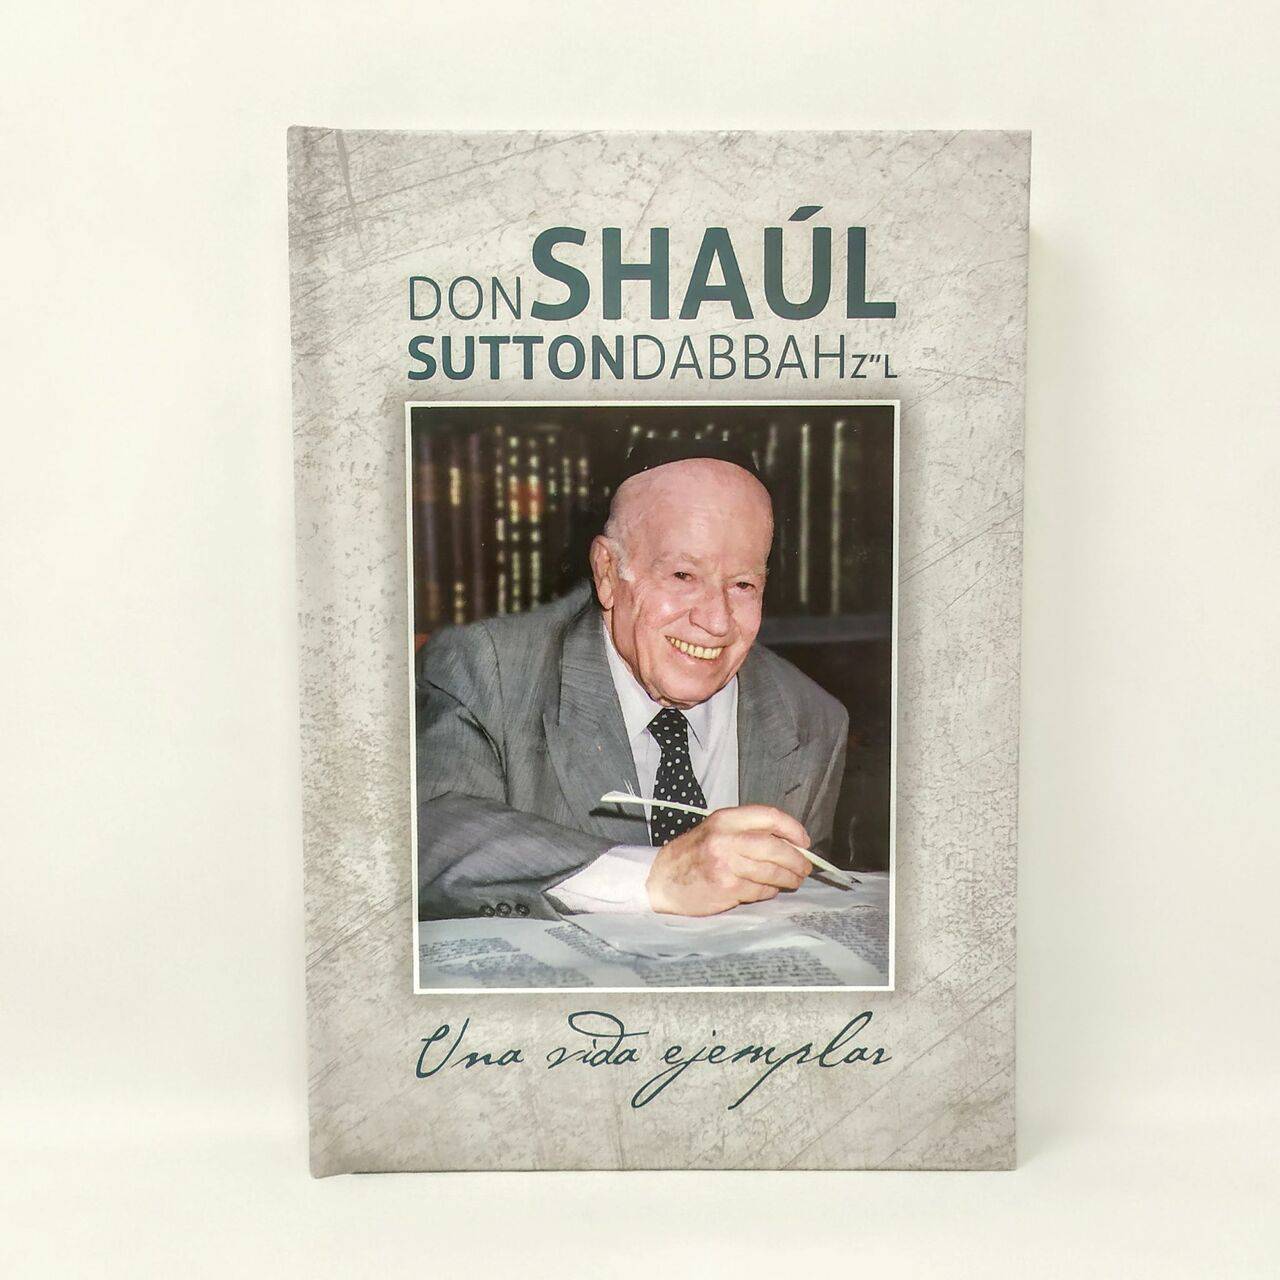 Don Shaul Sutton Dabbah Una vida ejemplar - Libreria Jerusalem Centro